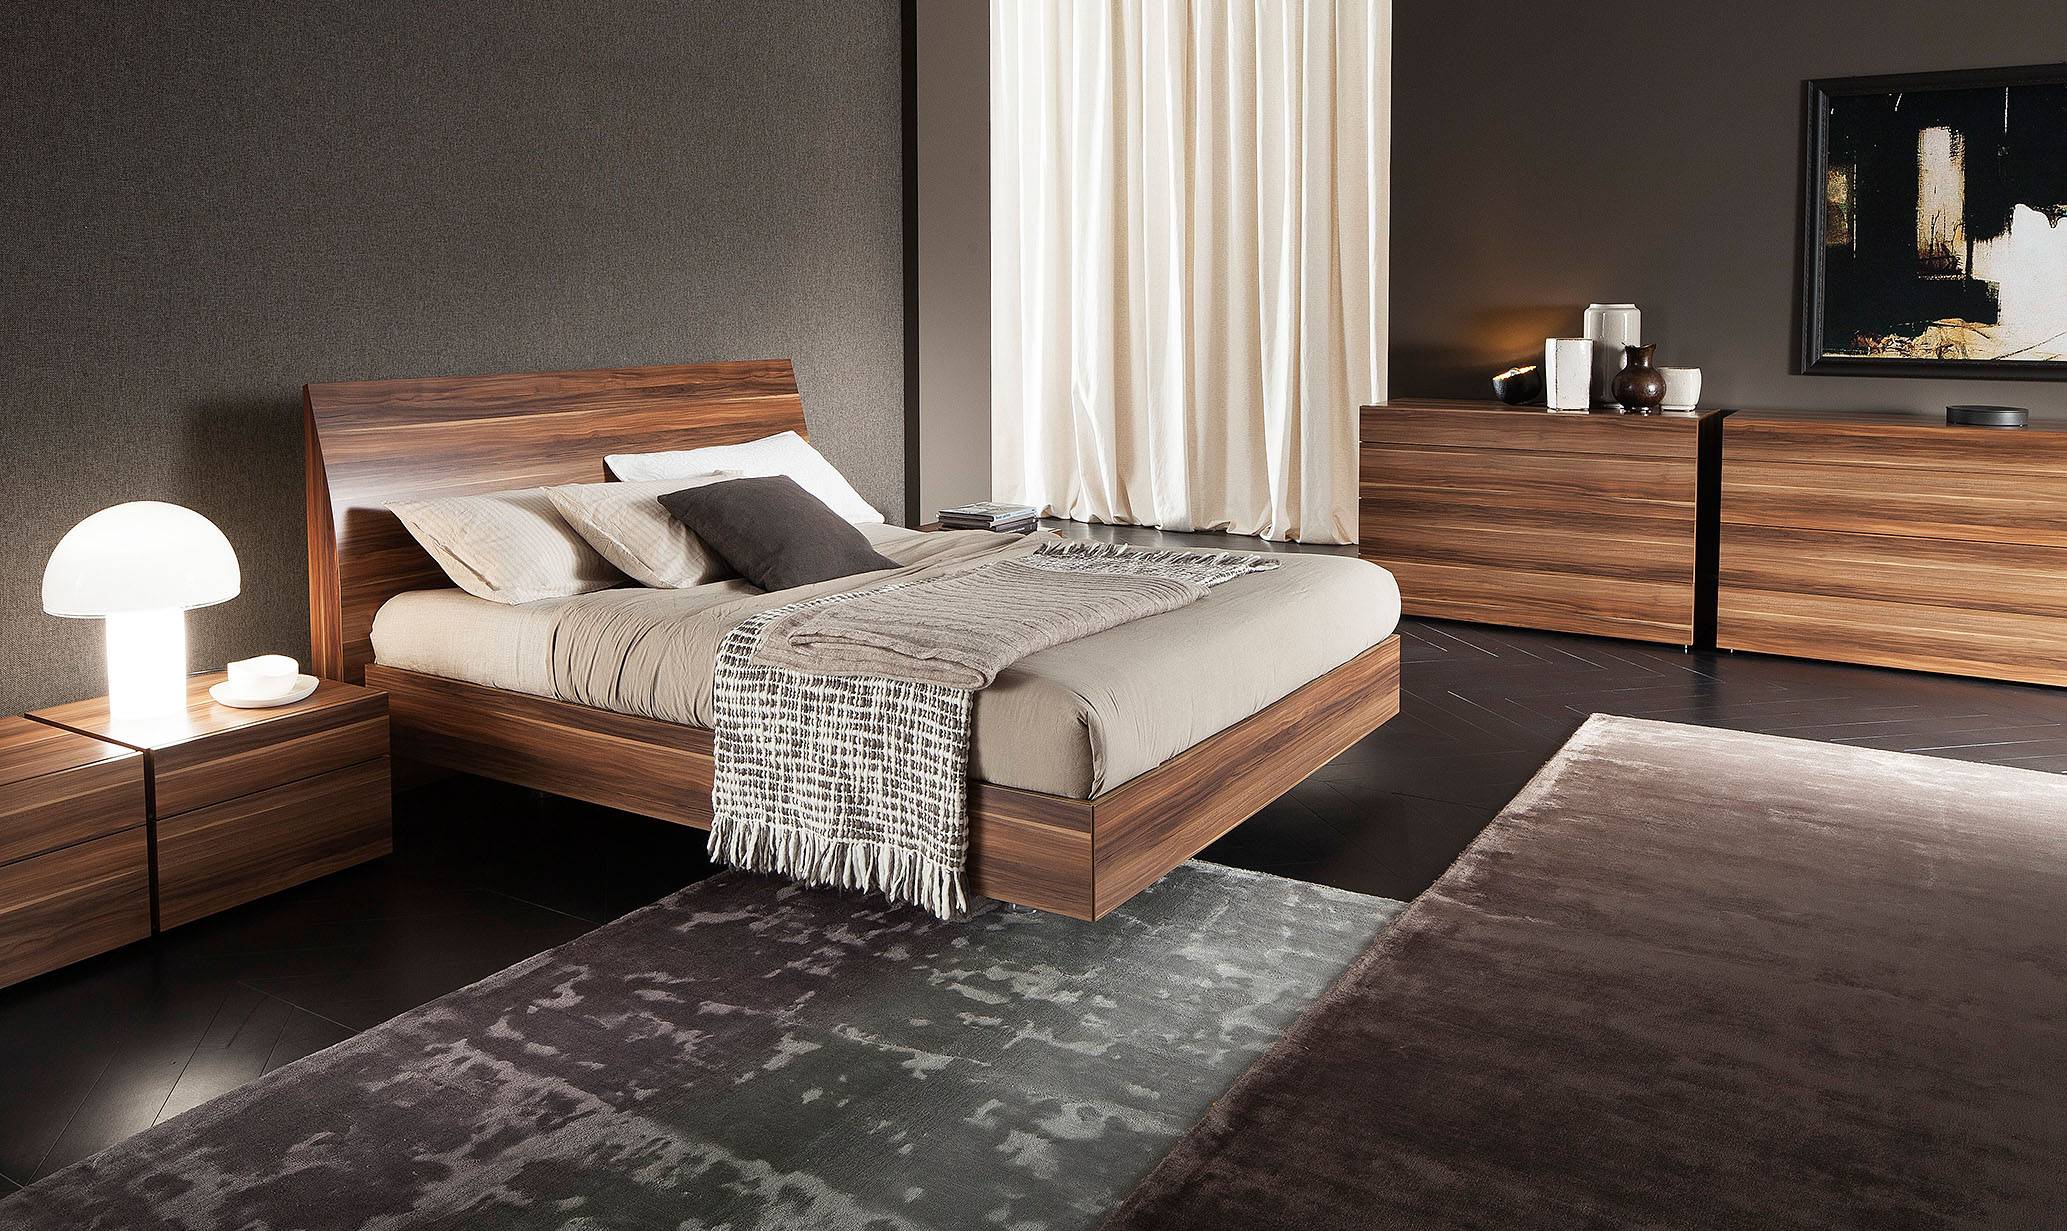 contemporary bedroom furniture los angeles